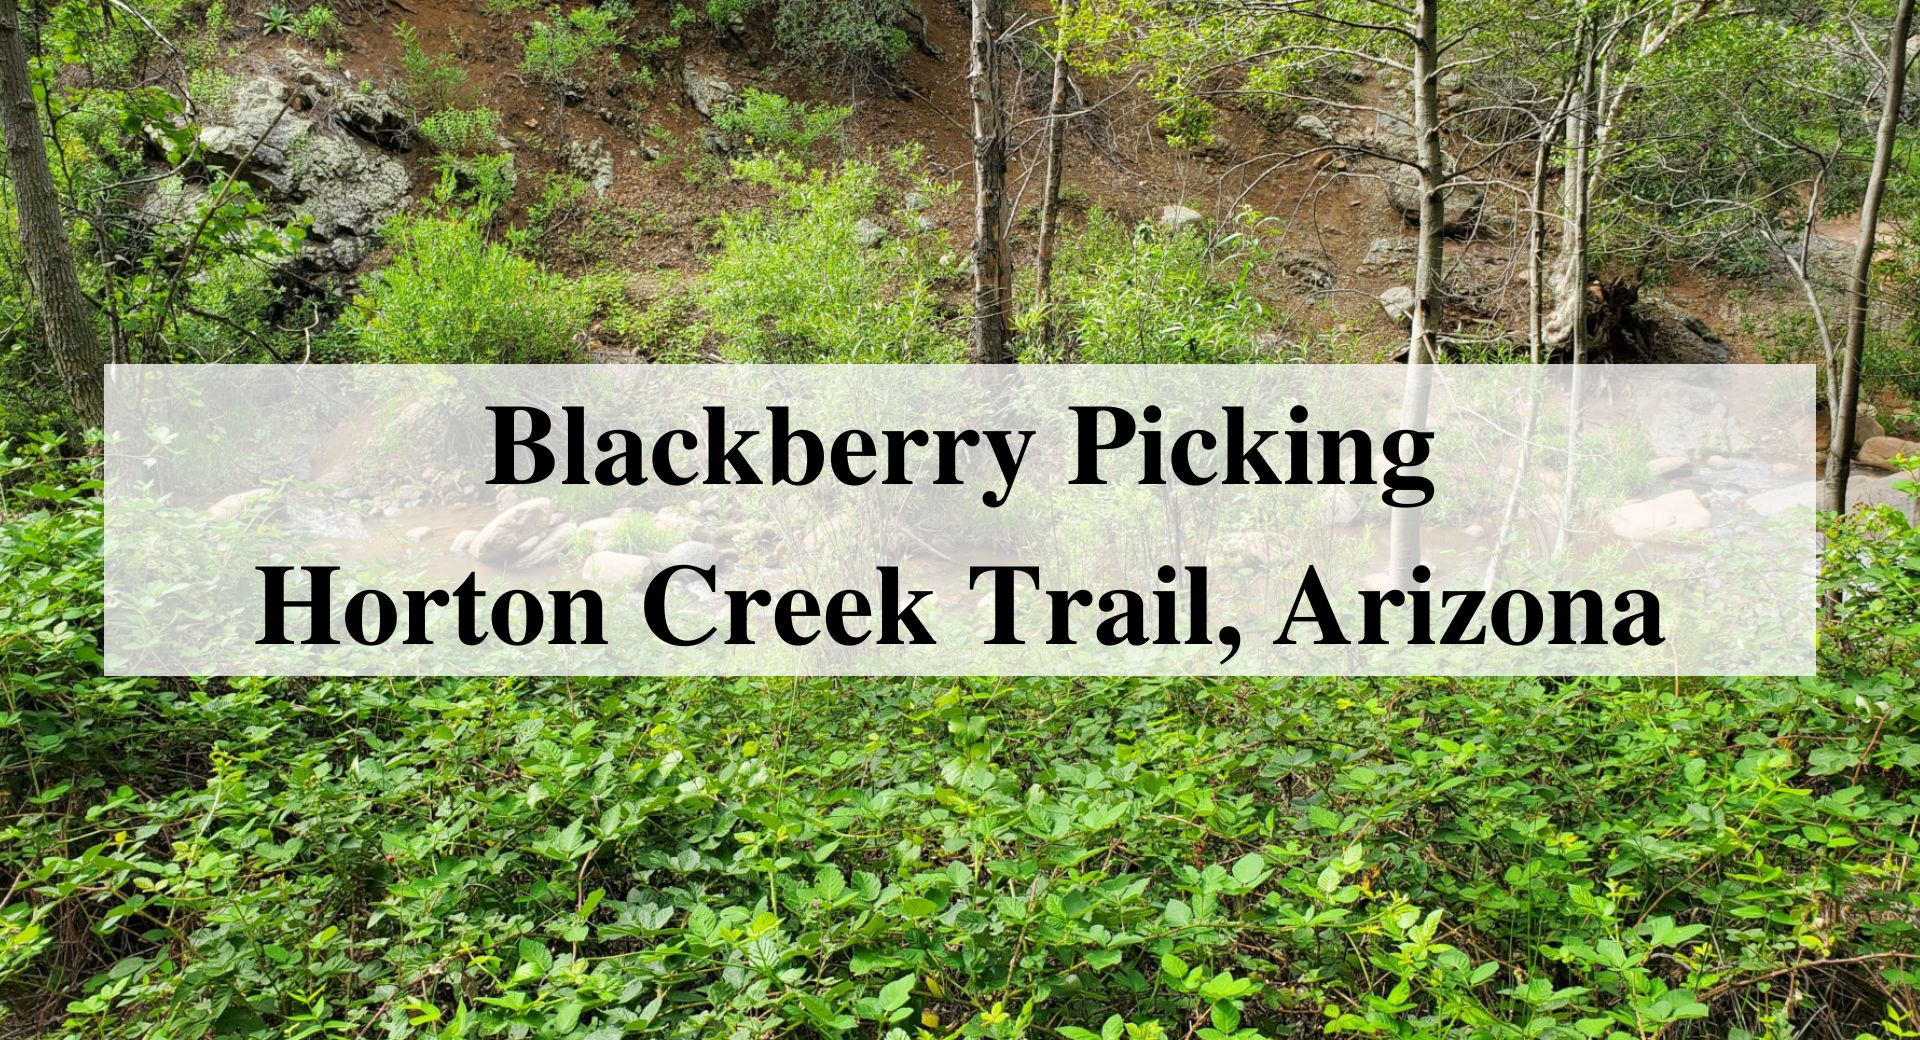 Blackberry Picking at Horton Creek Trail, Arizona